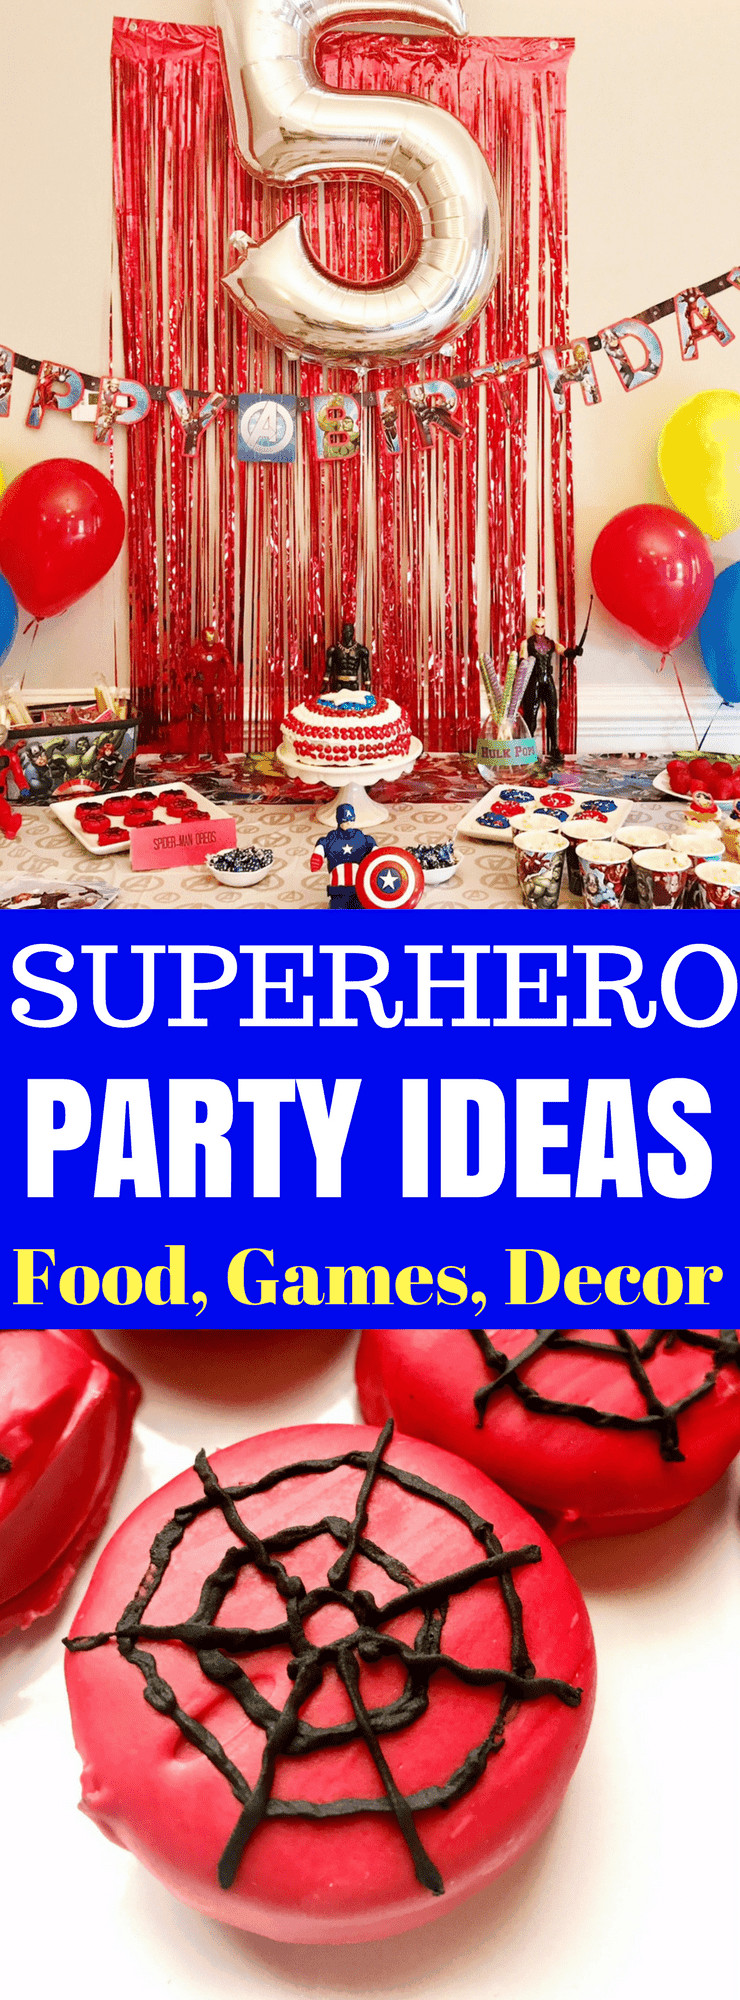 Superheroes Halloween Party Ideas
 Superhero Party Ideas Avengers Party Games Decor Food